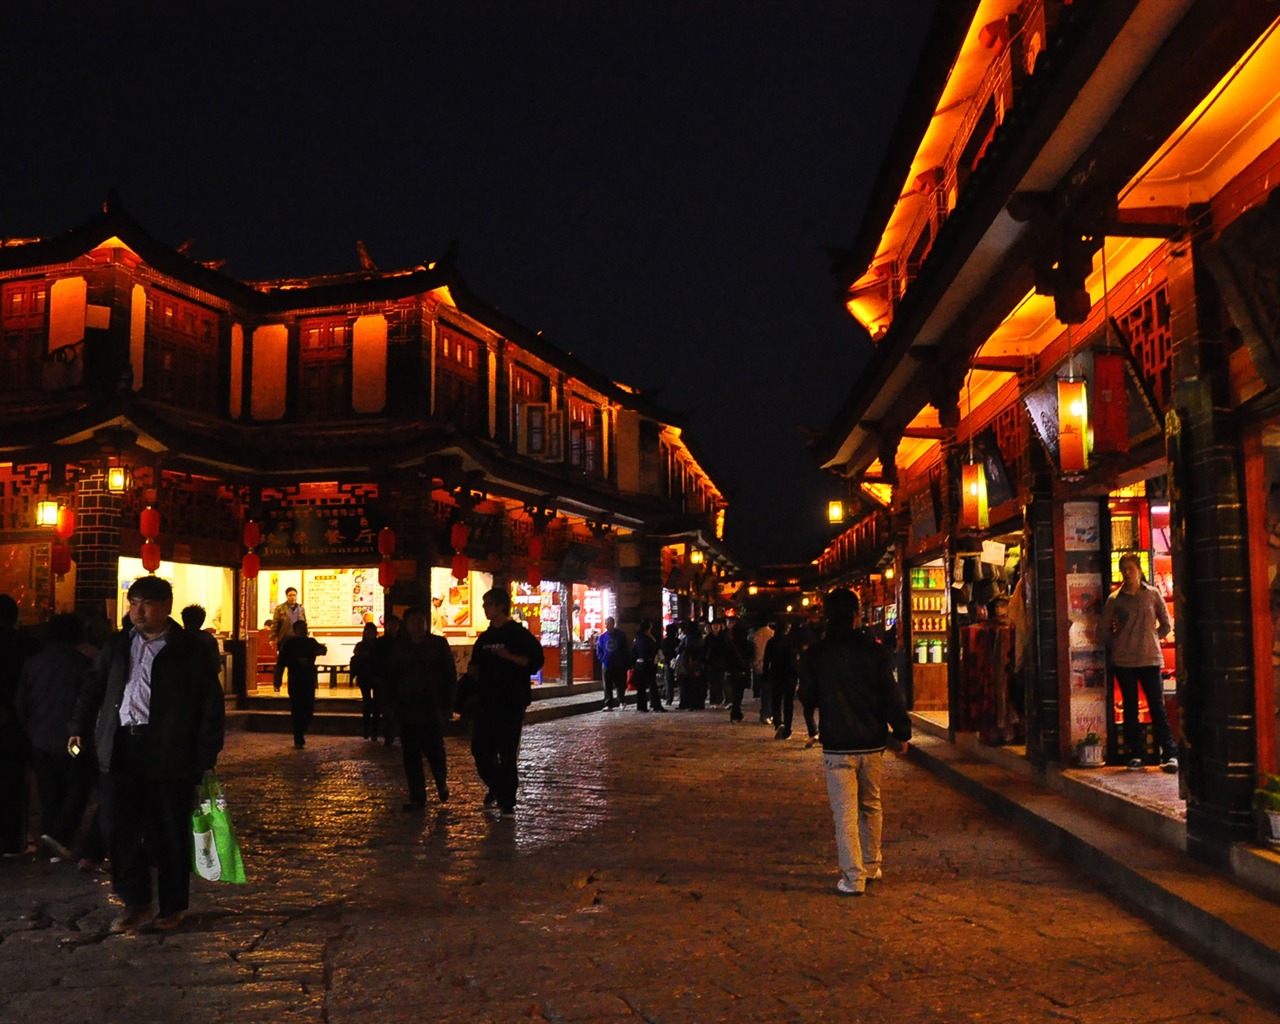 Lijiang Ancient Town Night (Old Hong OK works) #4 - 1280x1024